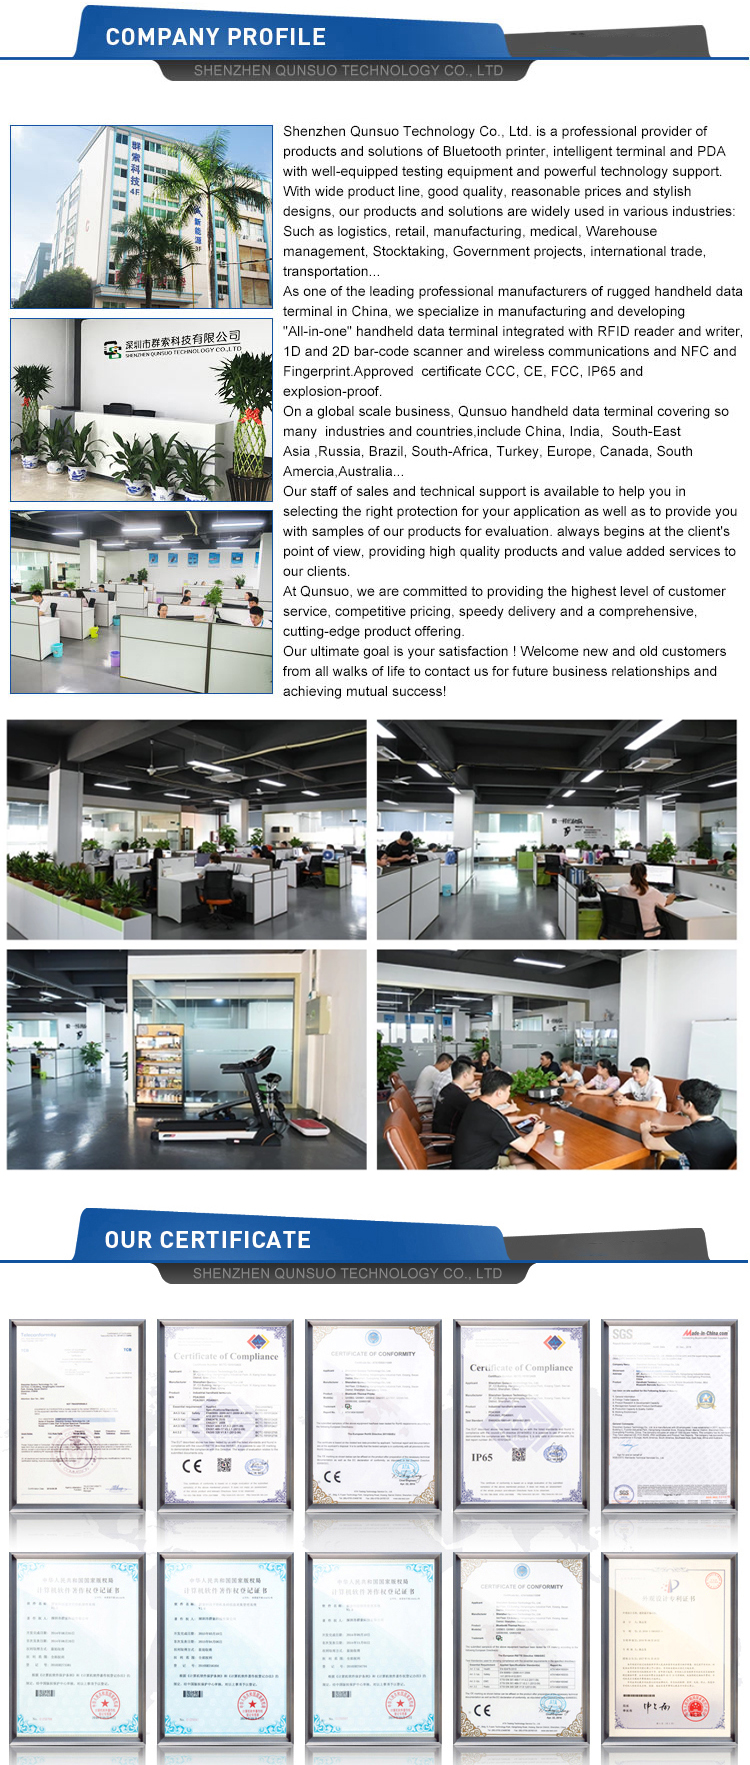 Qunsuo Technology Company information